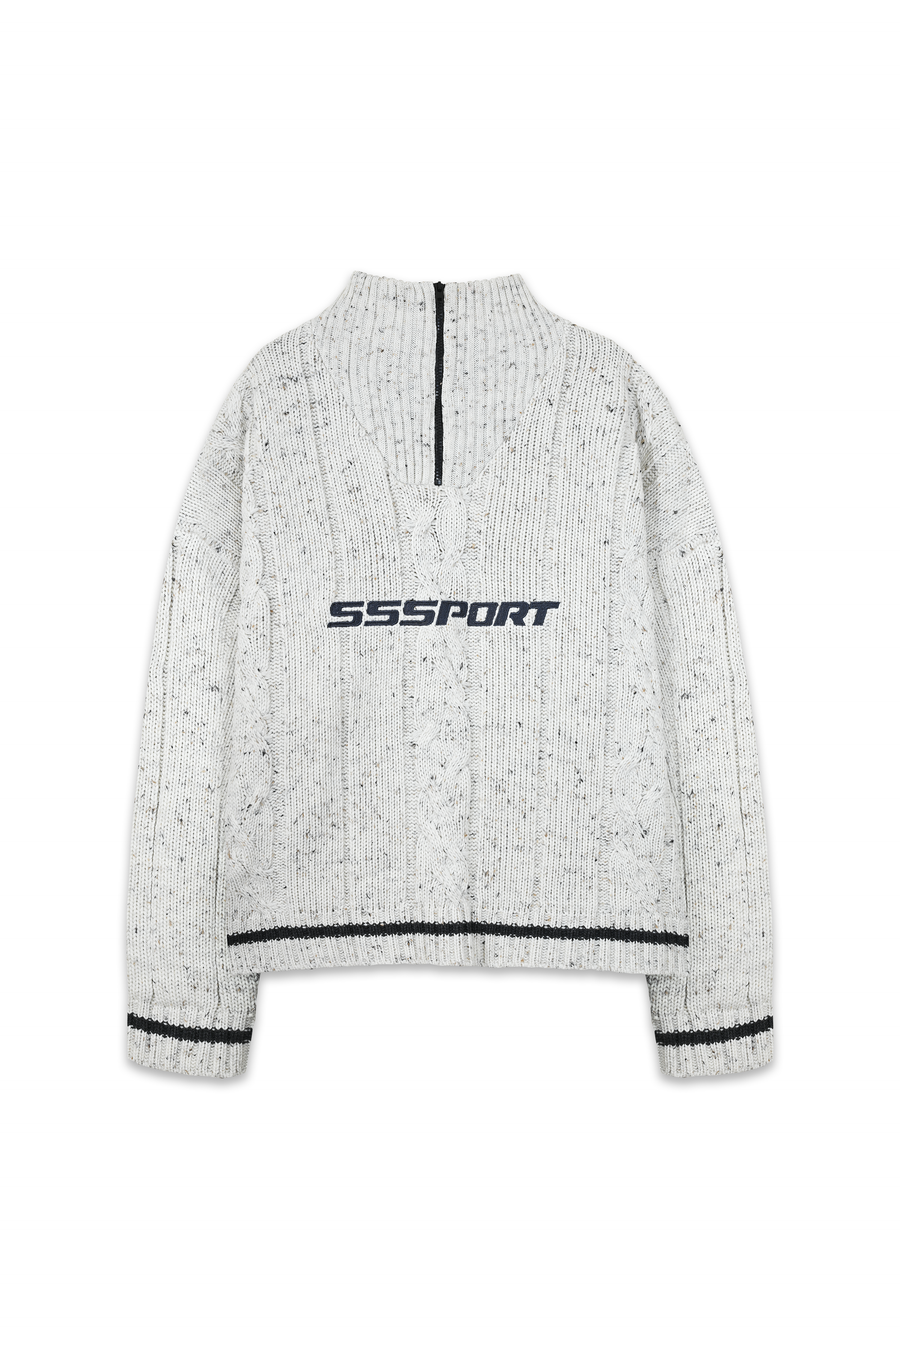 SSSport Lifestyle Knit